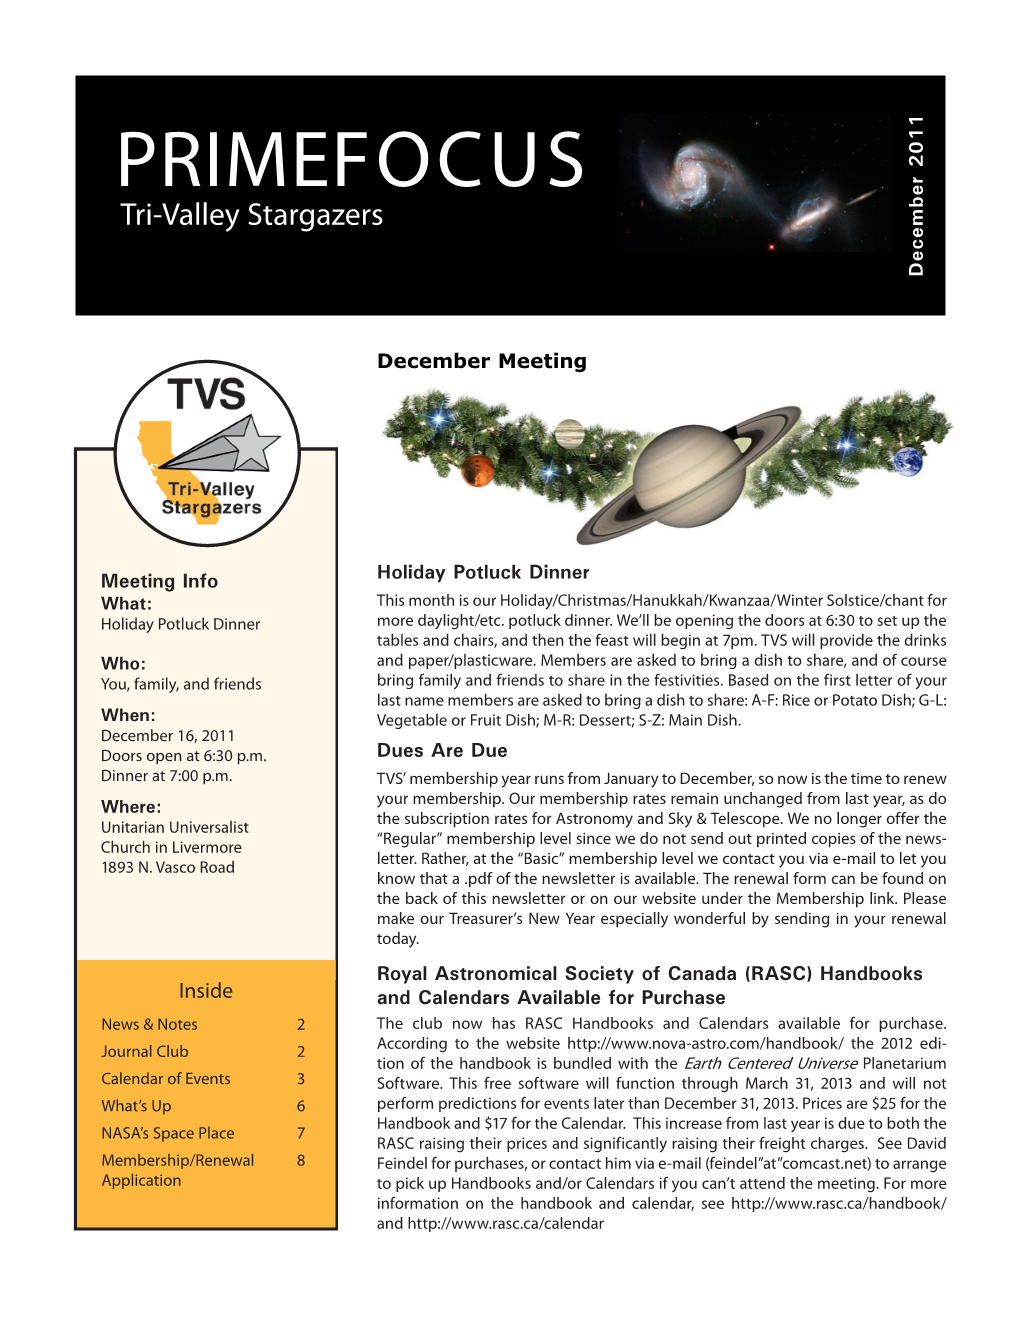 Primefocus Tri-Valley Stargazers December 2011